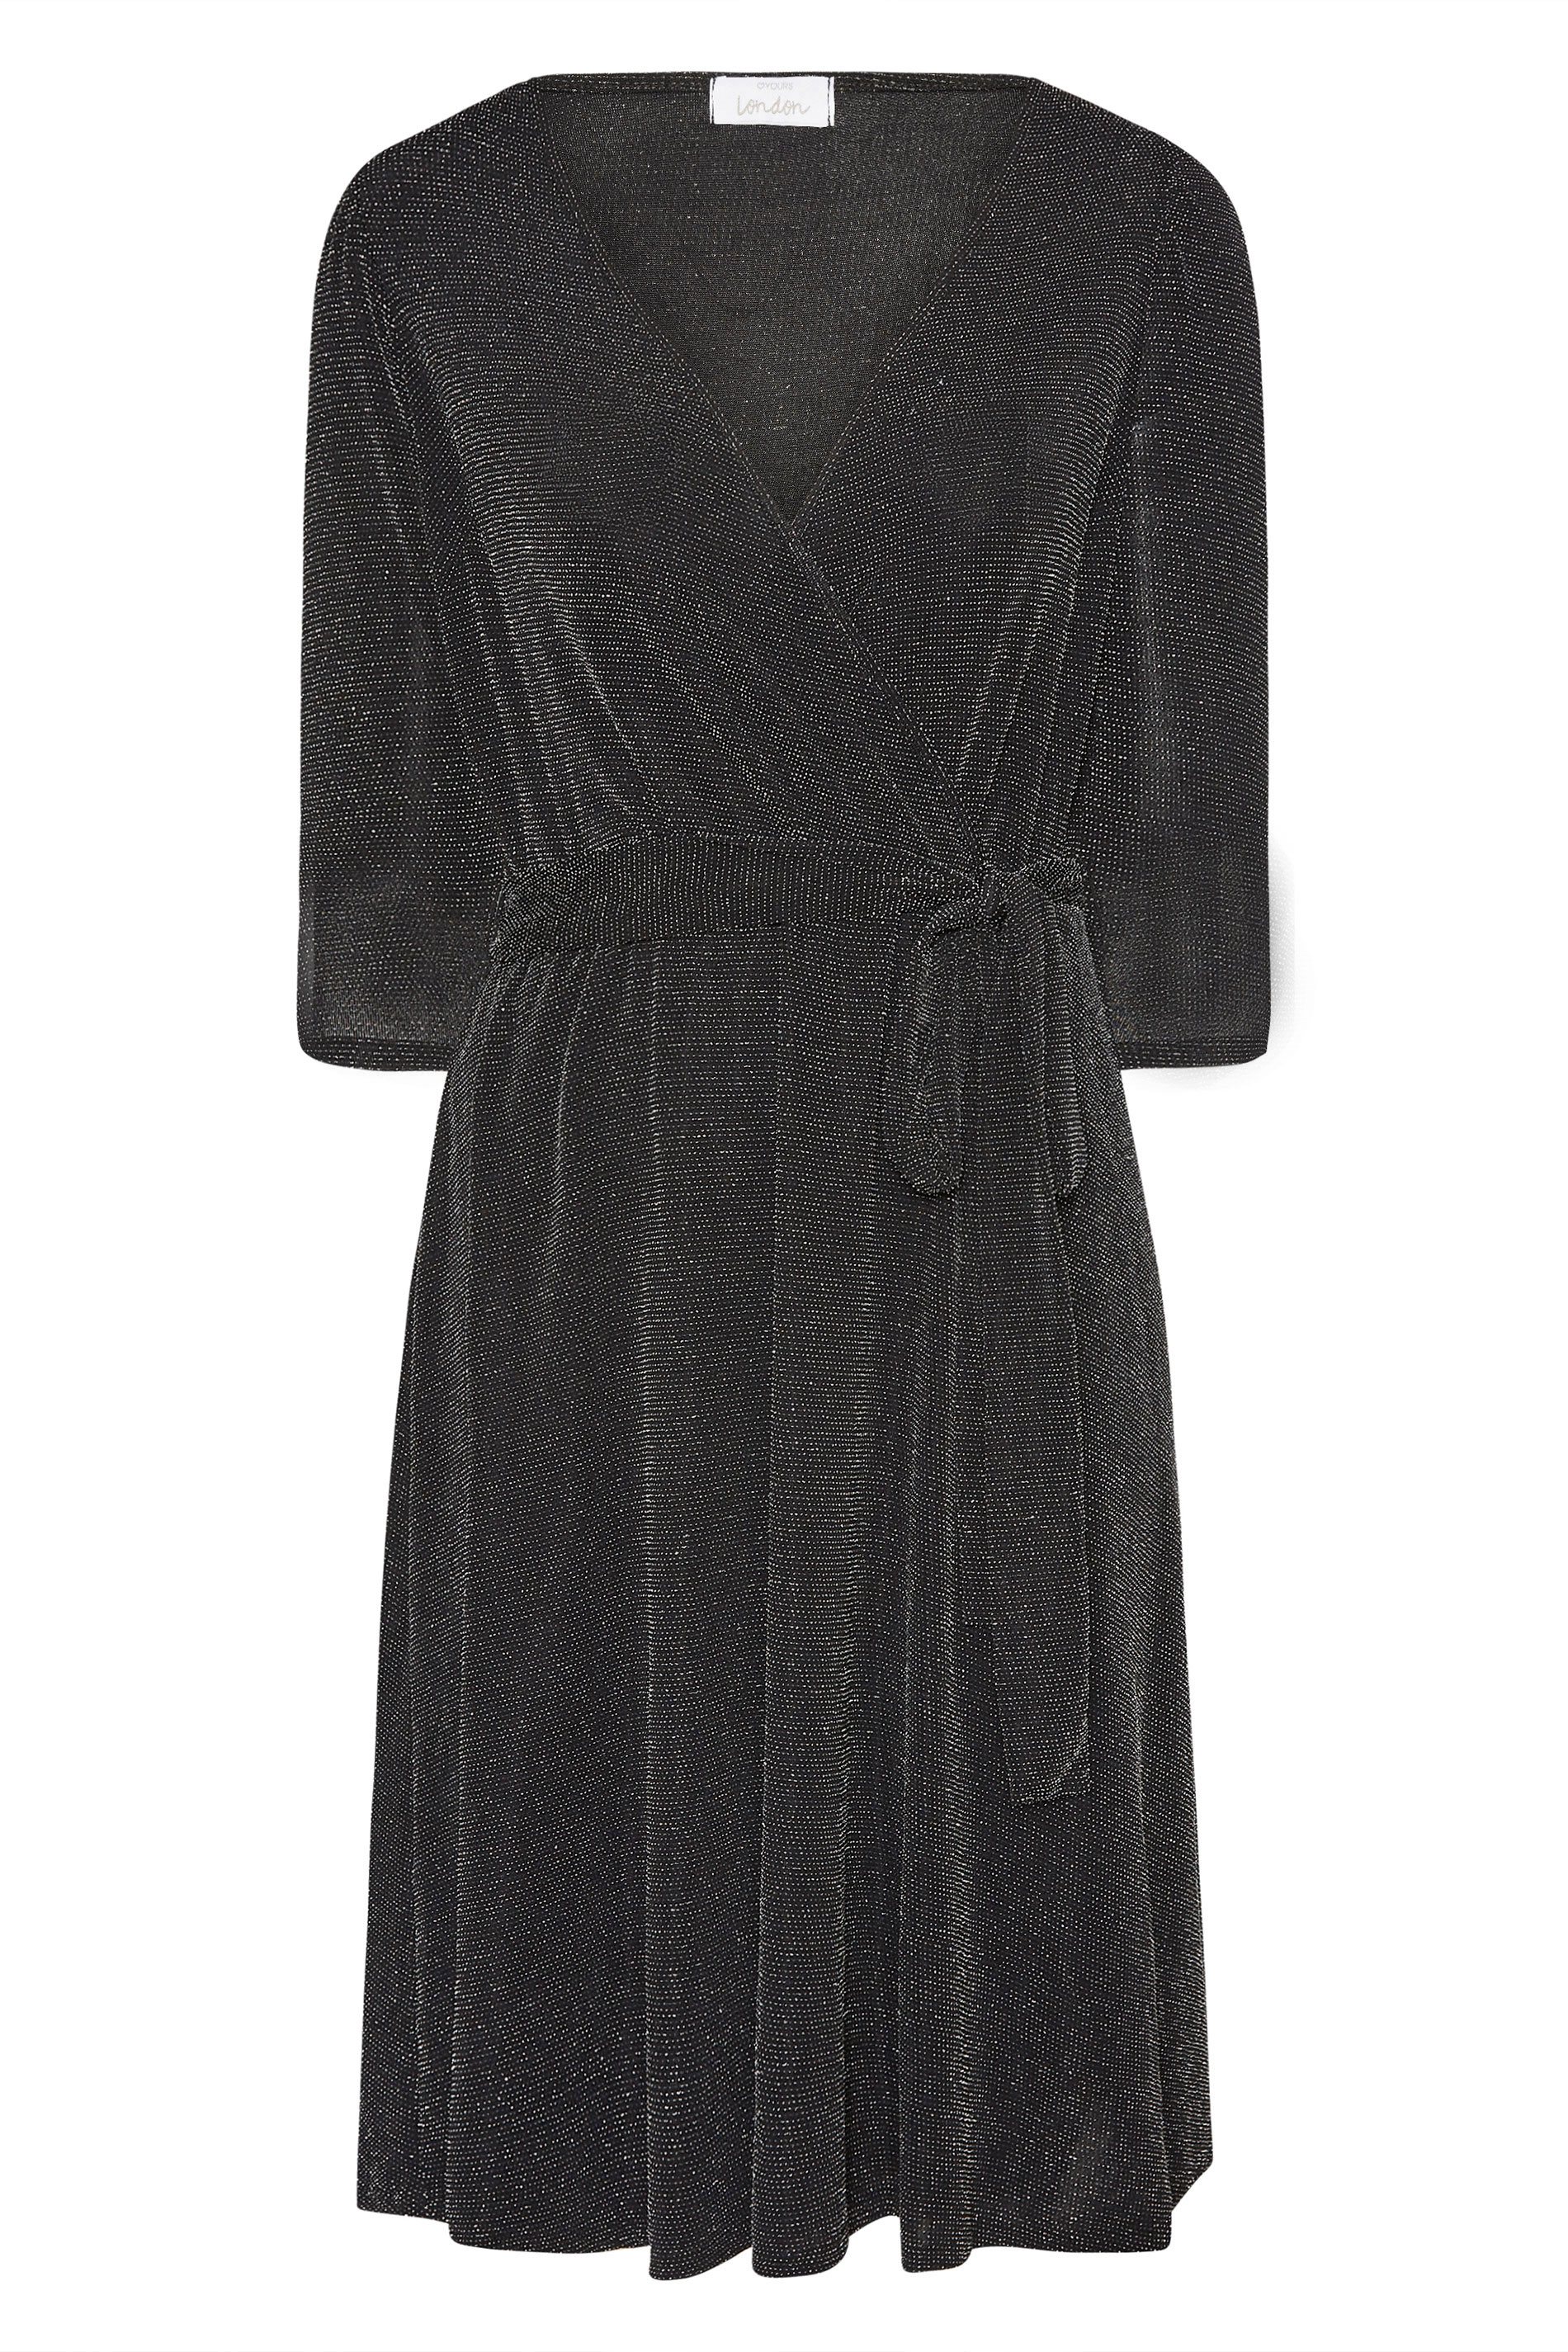 Robes Grande Taille Grande taille  Robes Portefeuilles | YOURS LONDON - Robe Noire Midi Cache-Coeur Pailletté - BF51386